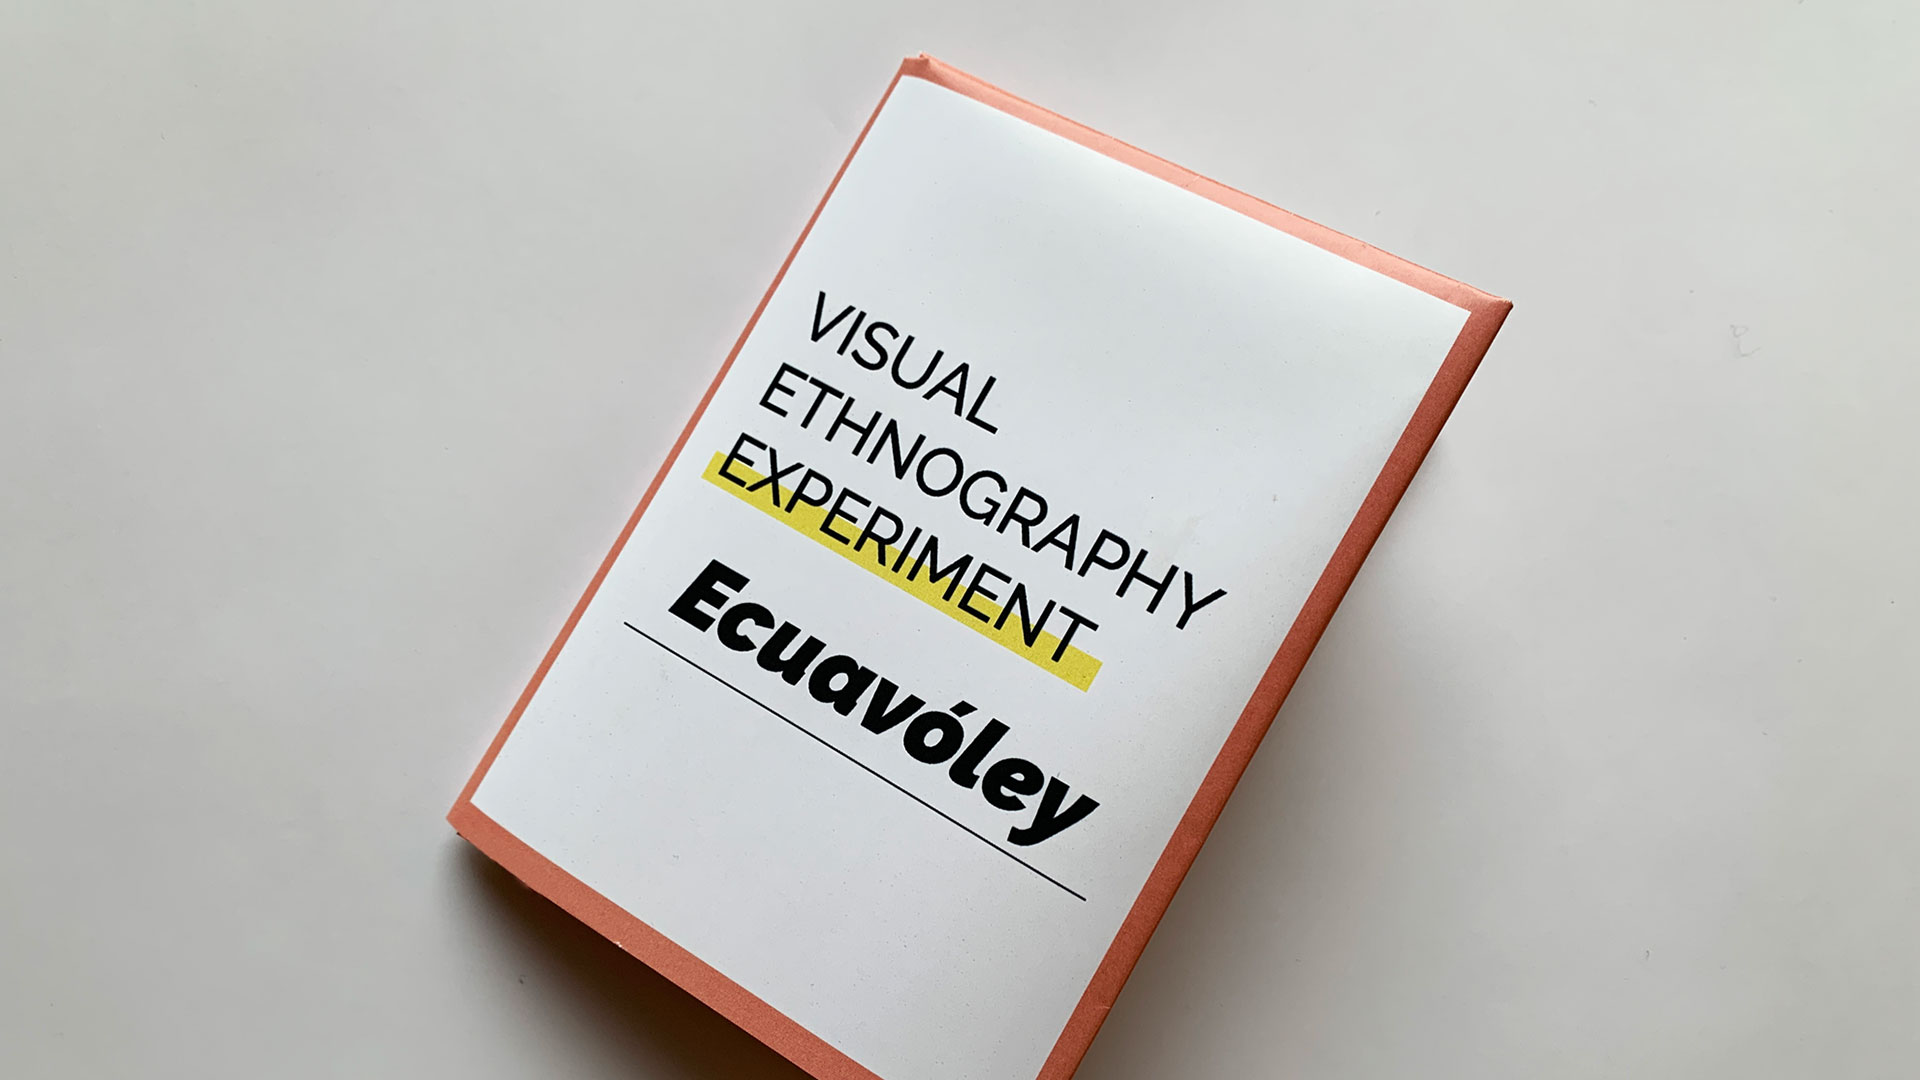 Visual ethnography on Ecuavolley